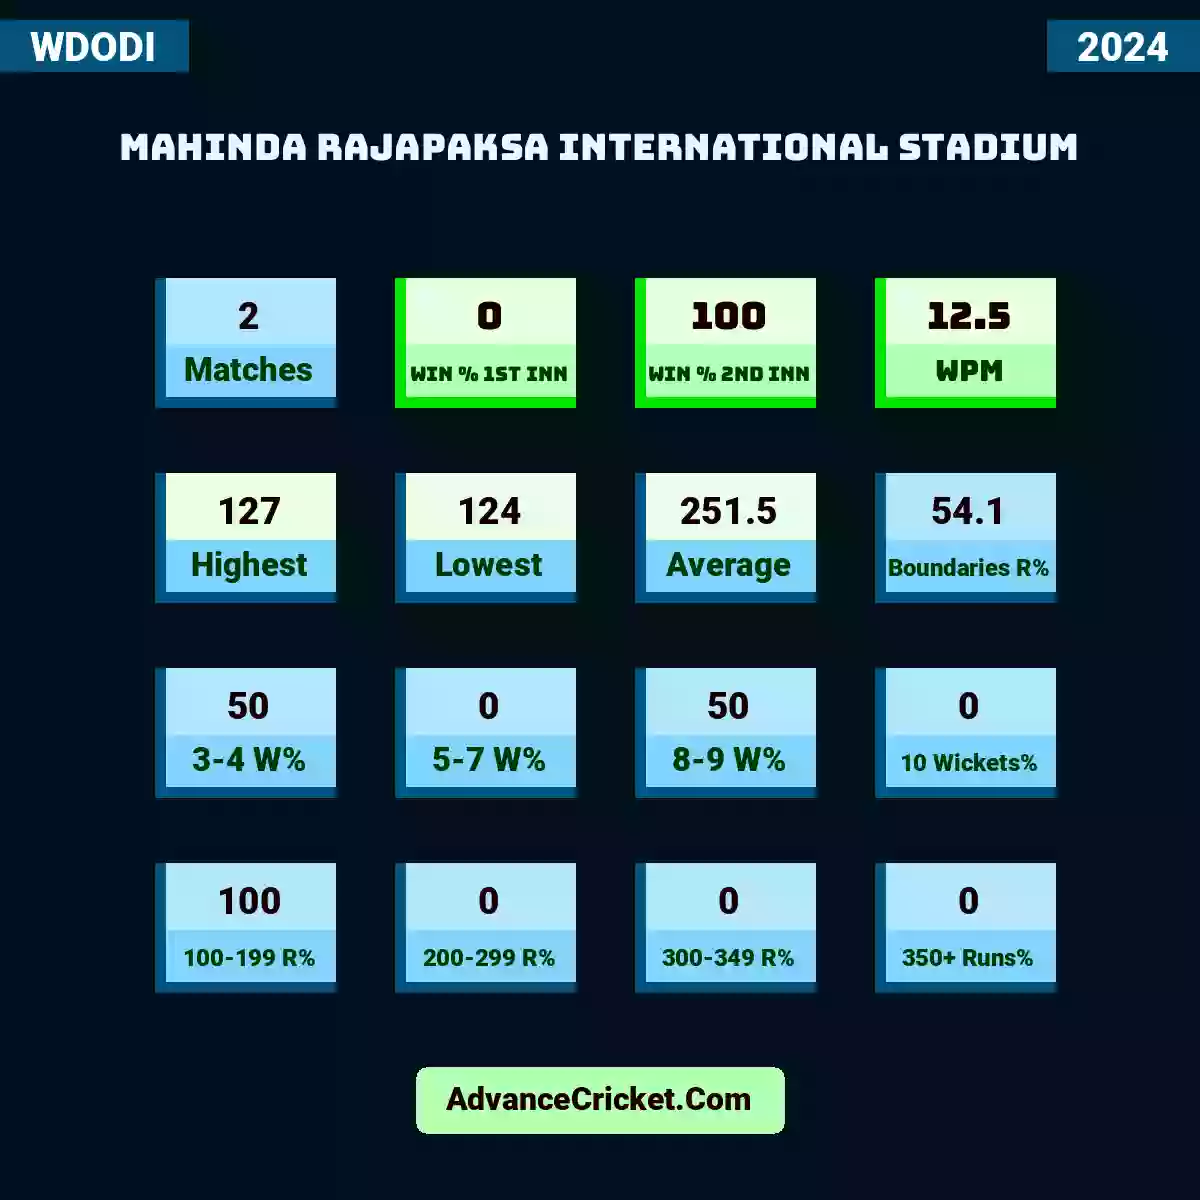 Image showing Mahinda Rajapaksa International Stadium WDODI 2024 with Matches: 2, Win % 1st Inn: 0, Win % 2nd Inn: 100, WPM: 12.5, Highest: 127, Lowest: 124, Average: 251.5, Boundaries R%: 54.1, 3-4 W%: 50, 5-7 W%: 0, 8-9 W%: 50, 10 Wickets%: 0, 100-199 R%: 100, 200-299 R%: 0, 300-349 R%: 0, 350+ Ru